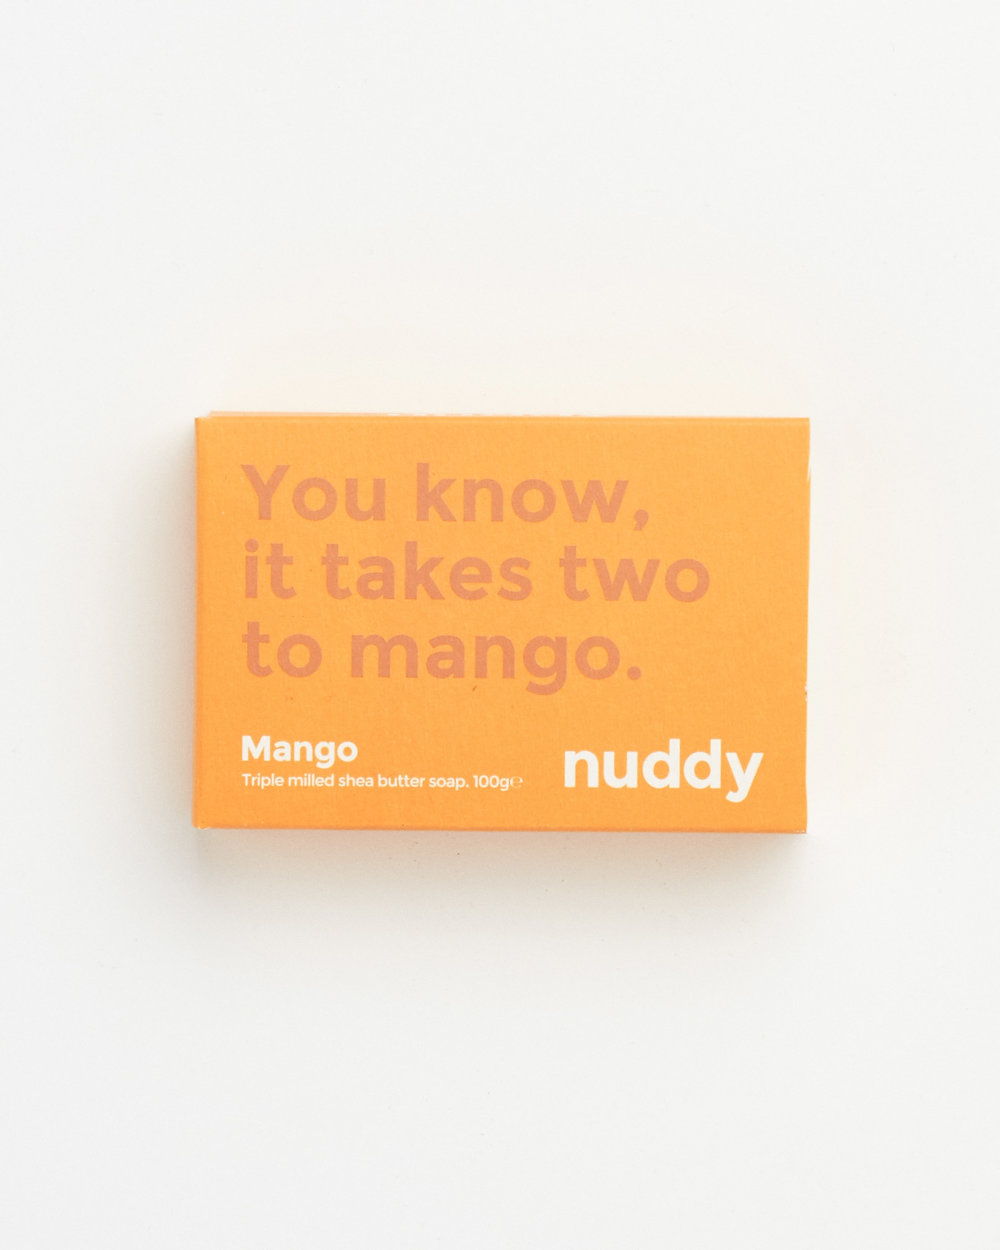 nuddy-mango.jpg